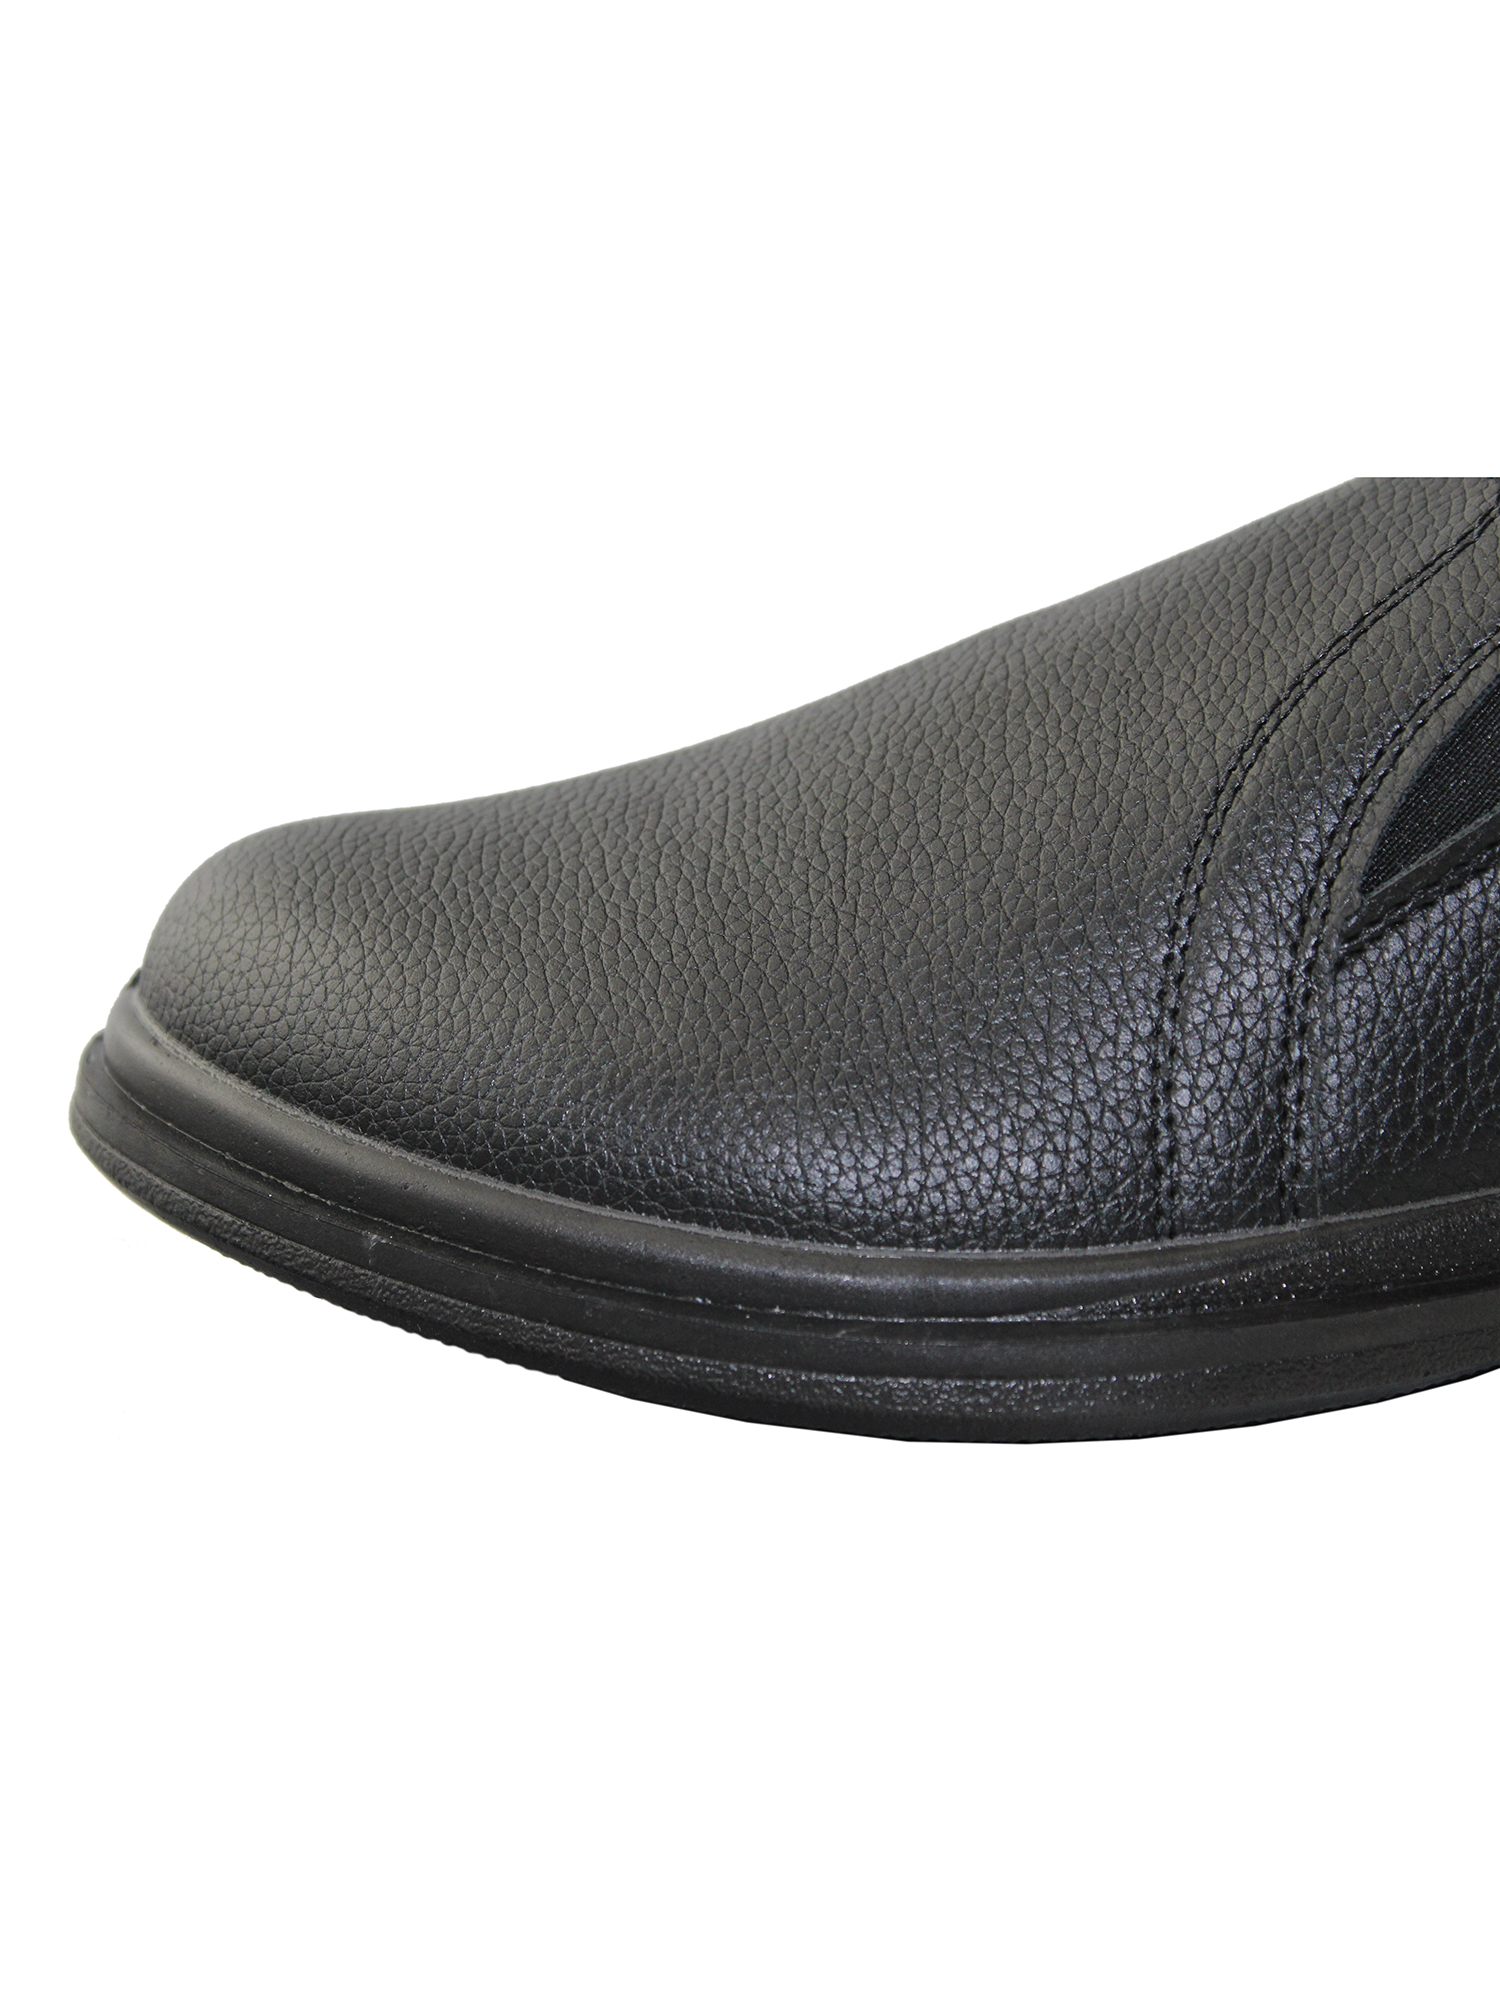 Tanleewa Men's Leather Work Shoes Anti-slip Waterproof Pull-on Casual Dress Shoe Size 10.5 - image 4 of 5